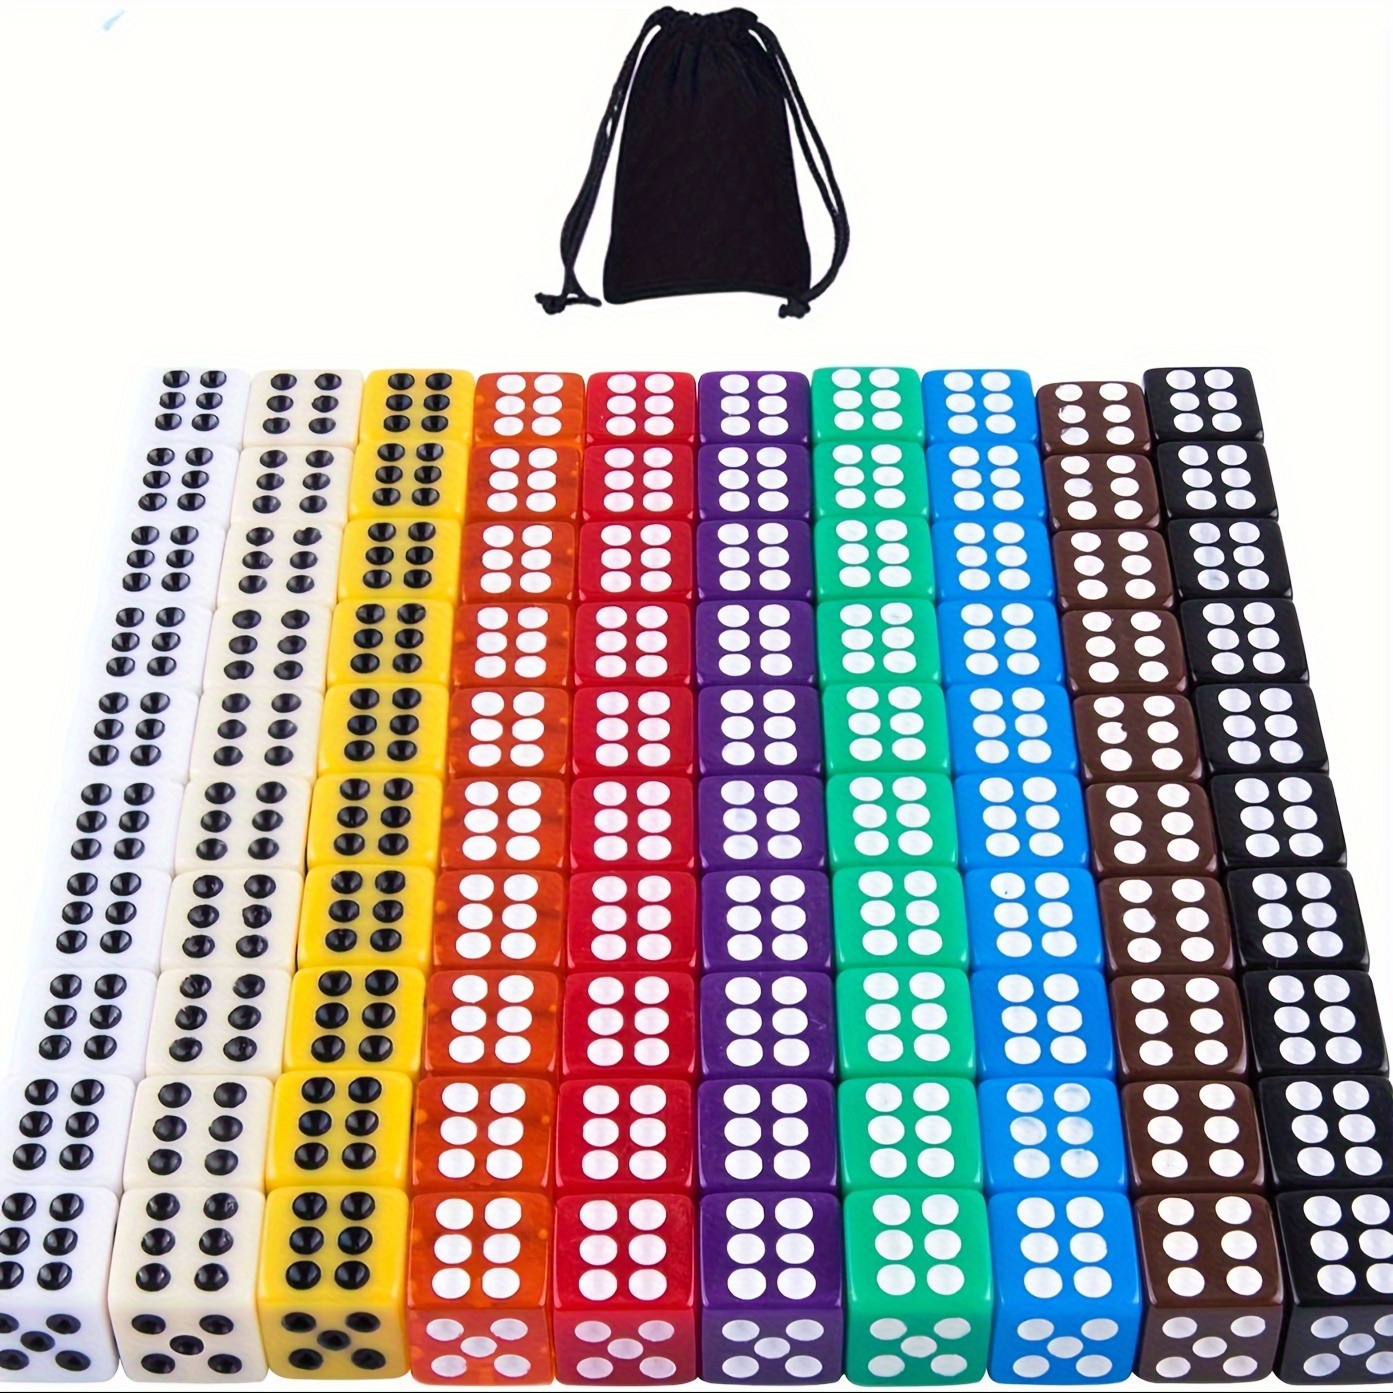 10mm Blank Multicolor Acrylic Cubes Math Teaching Supplies D6 s